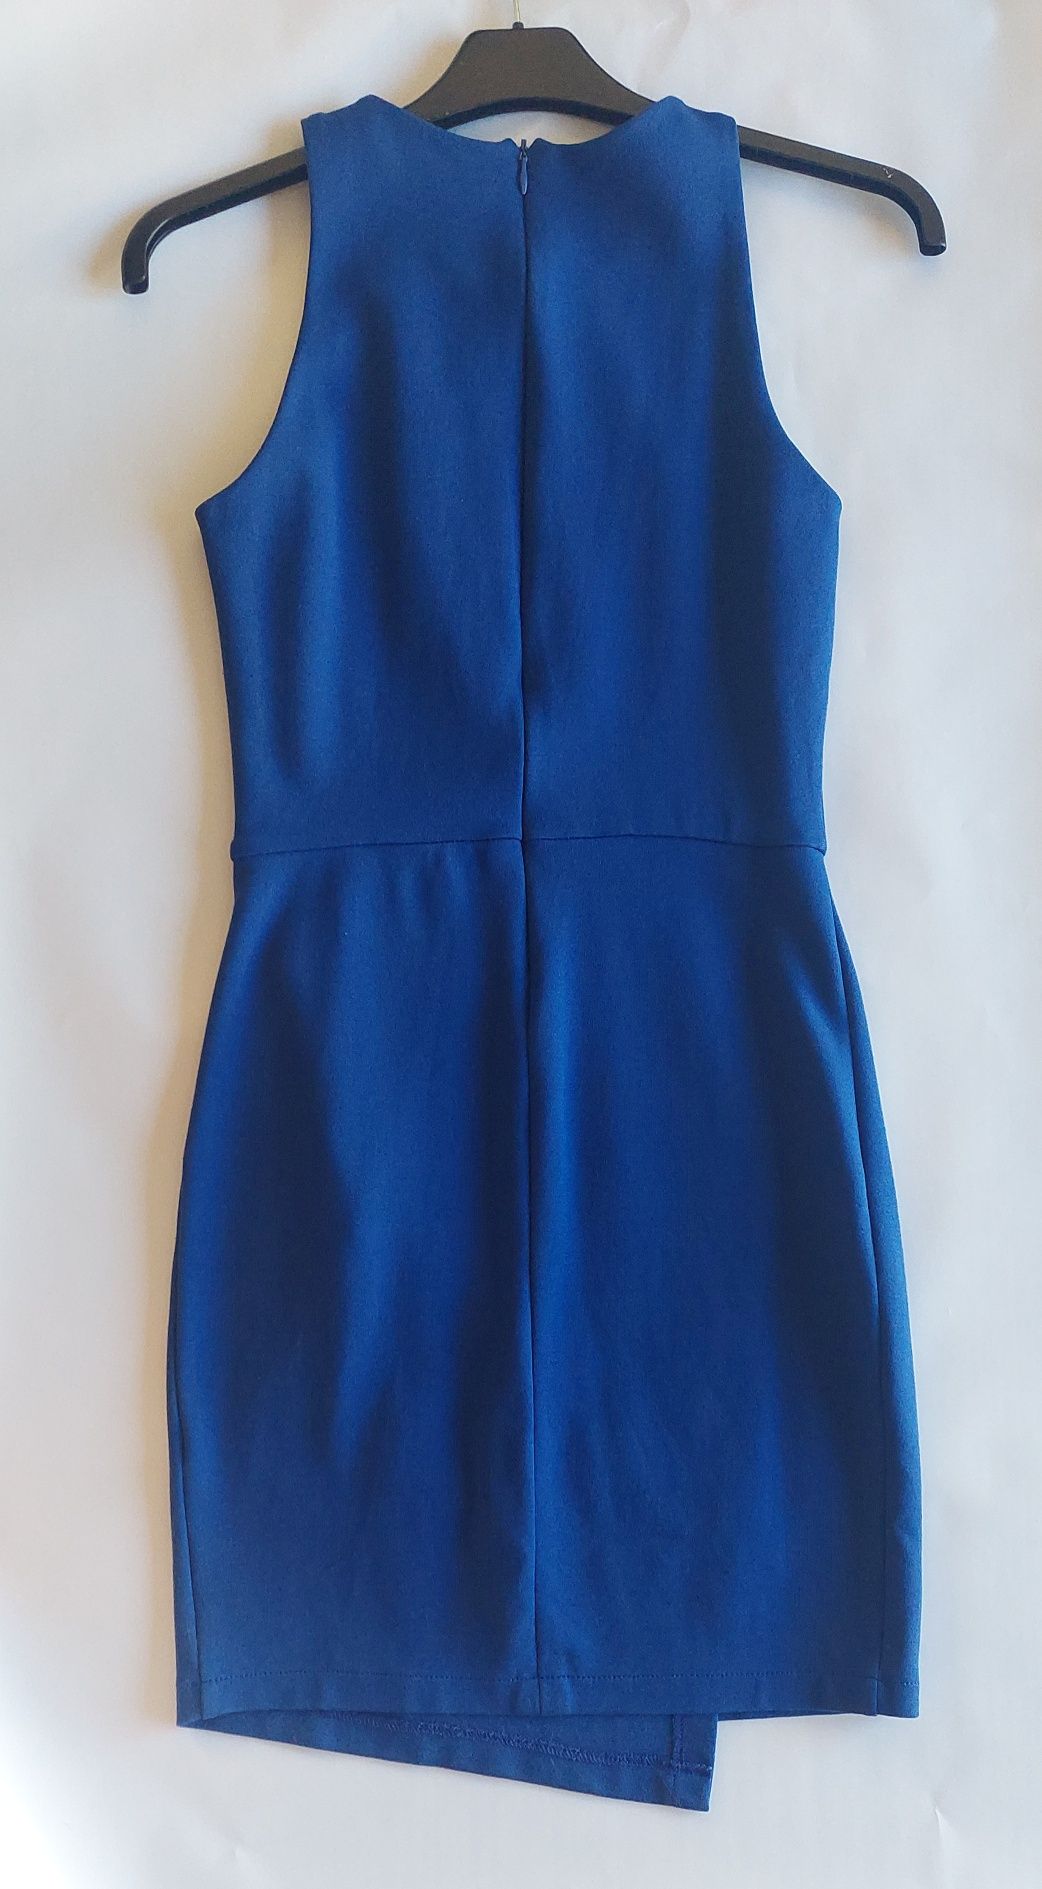 Vestido azul com racha - Zara